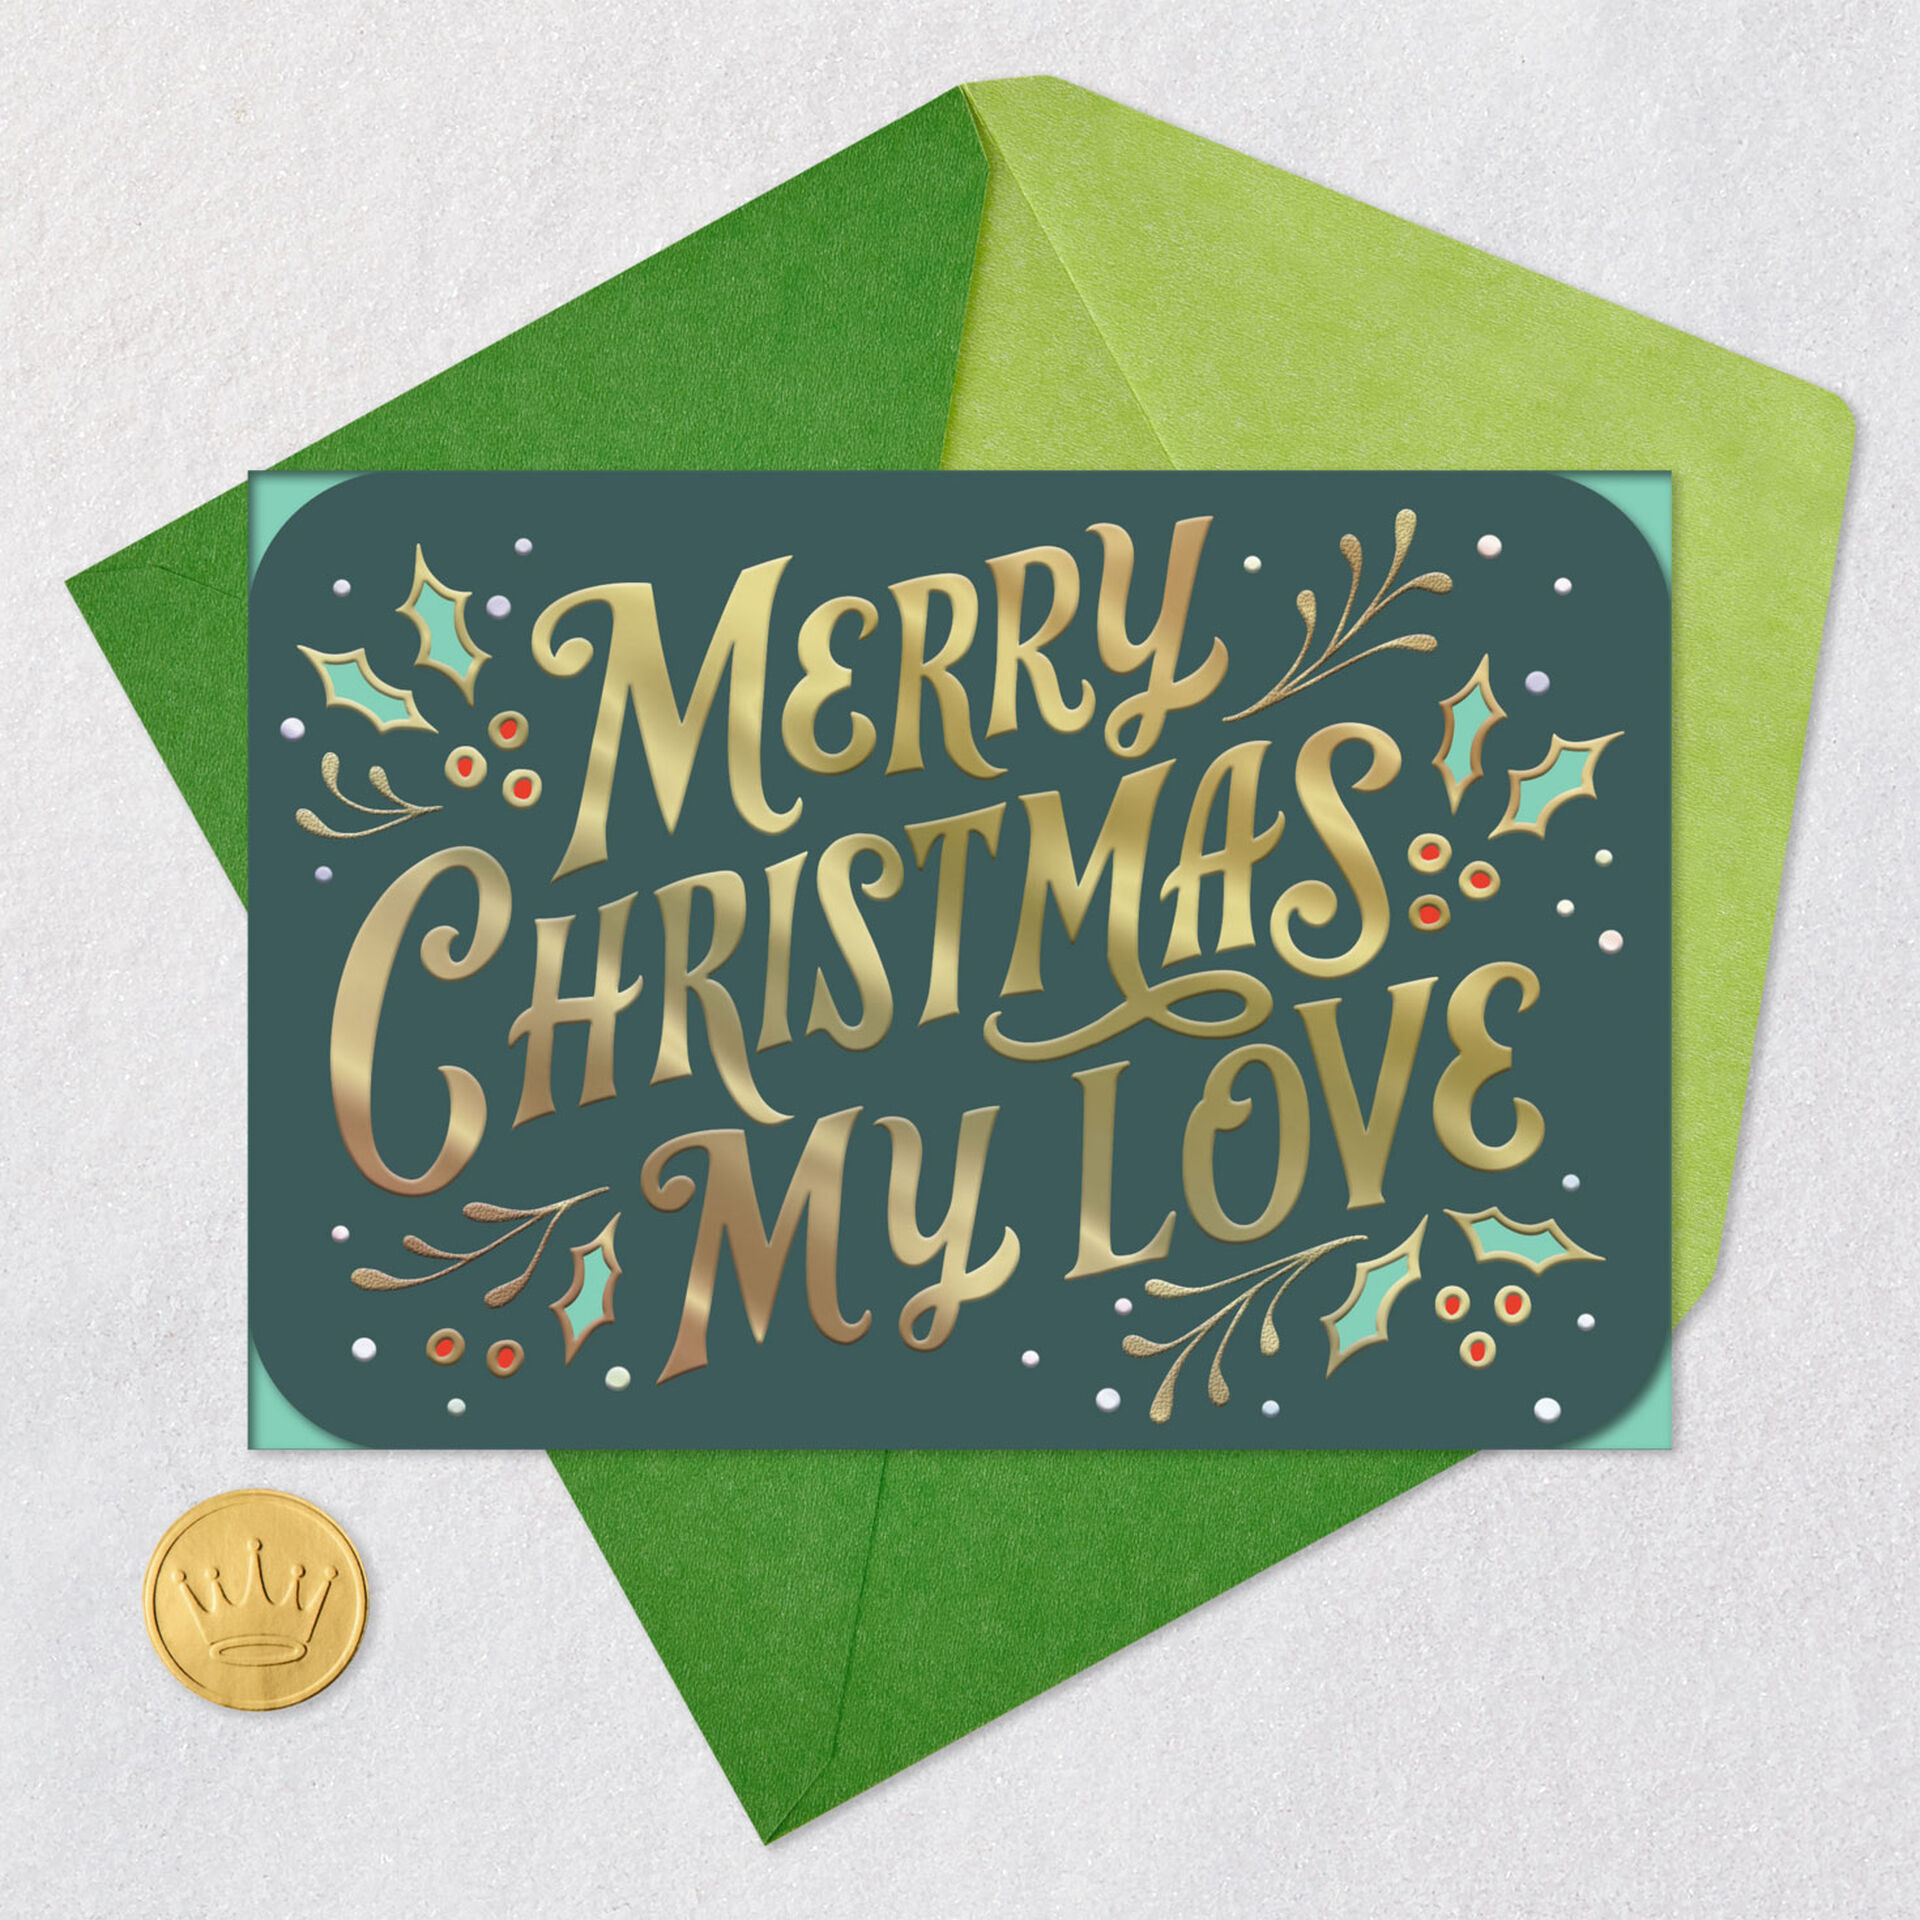 My Husband My Love Christmas Card Greeting Cards Hallmark